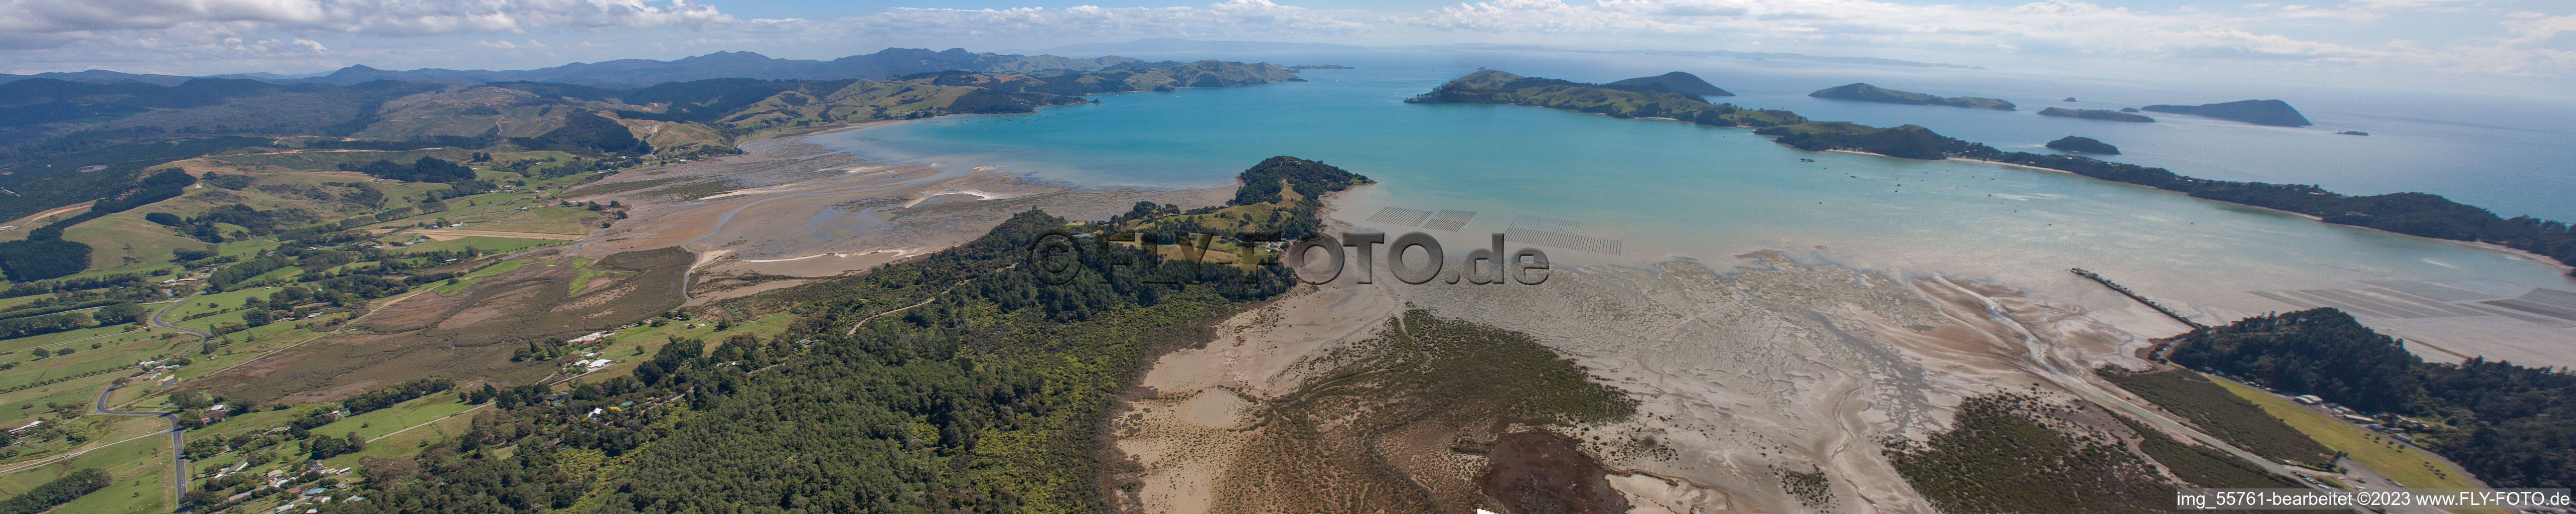 Schrägluftbild von Panorama in Coromandel im Bundesland Waikato, Neuseeland